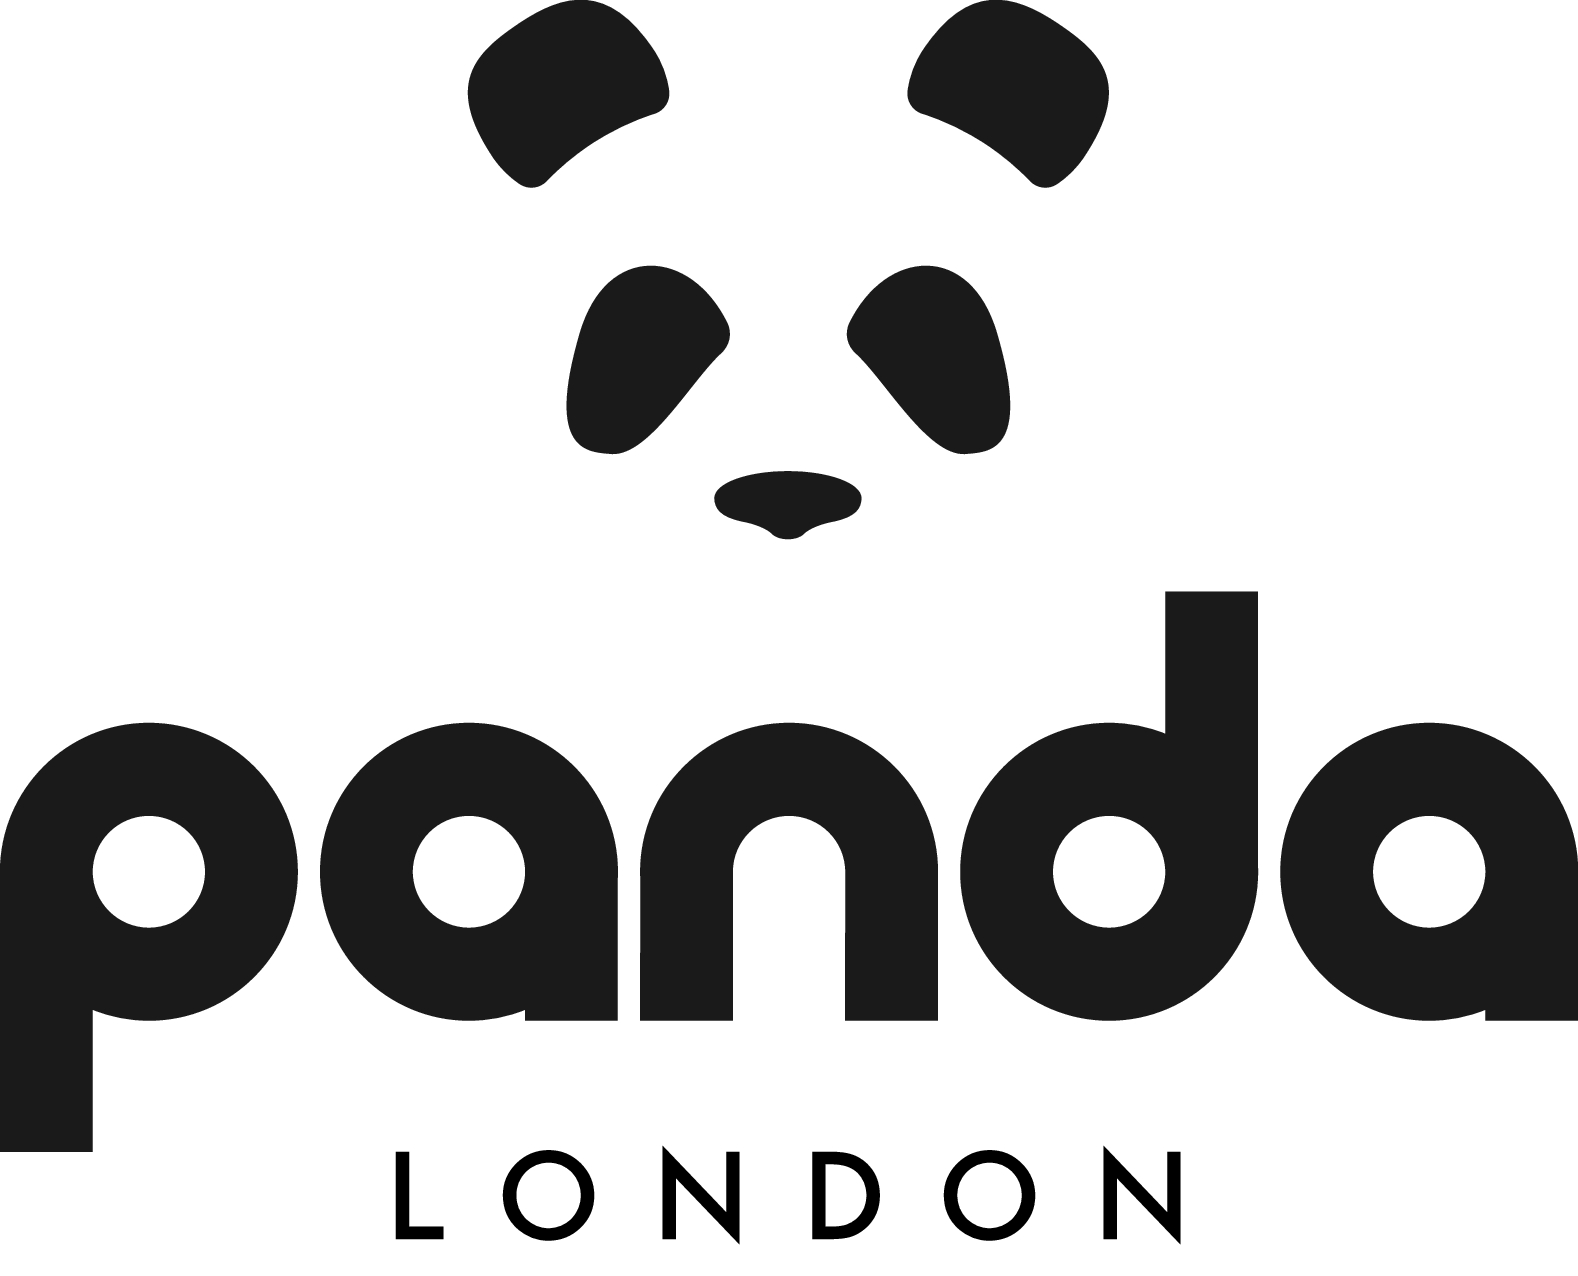  Panda London Voucher